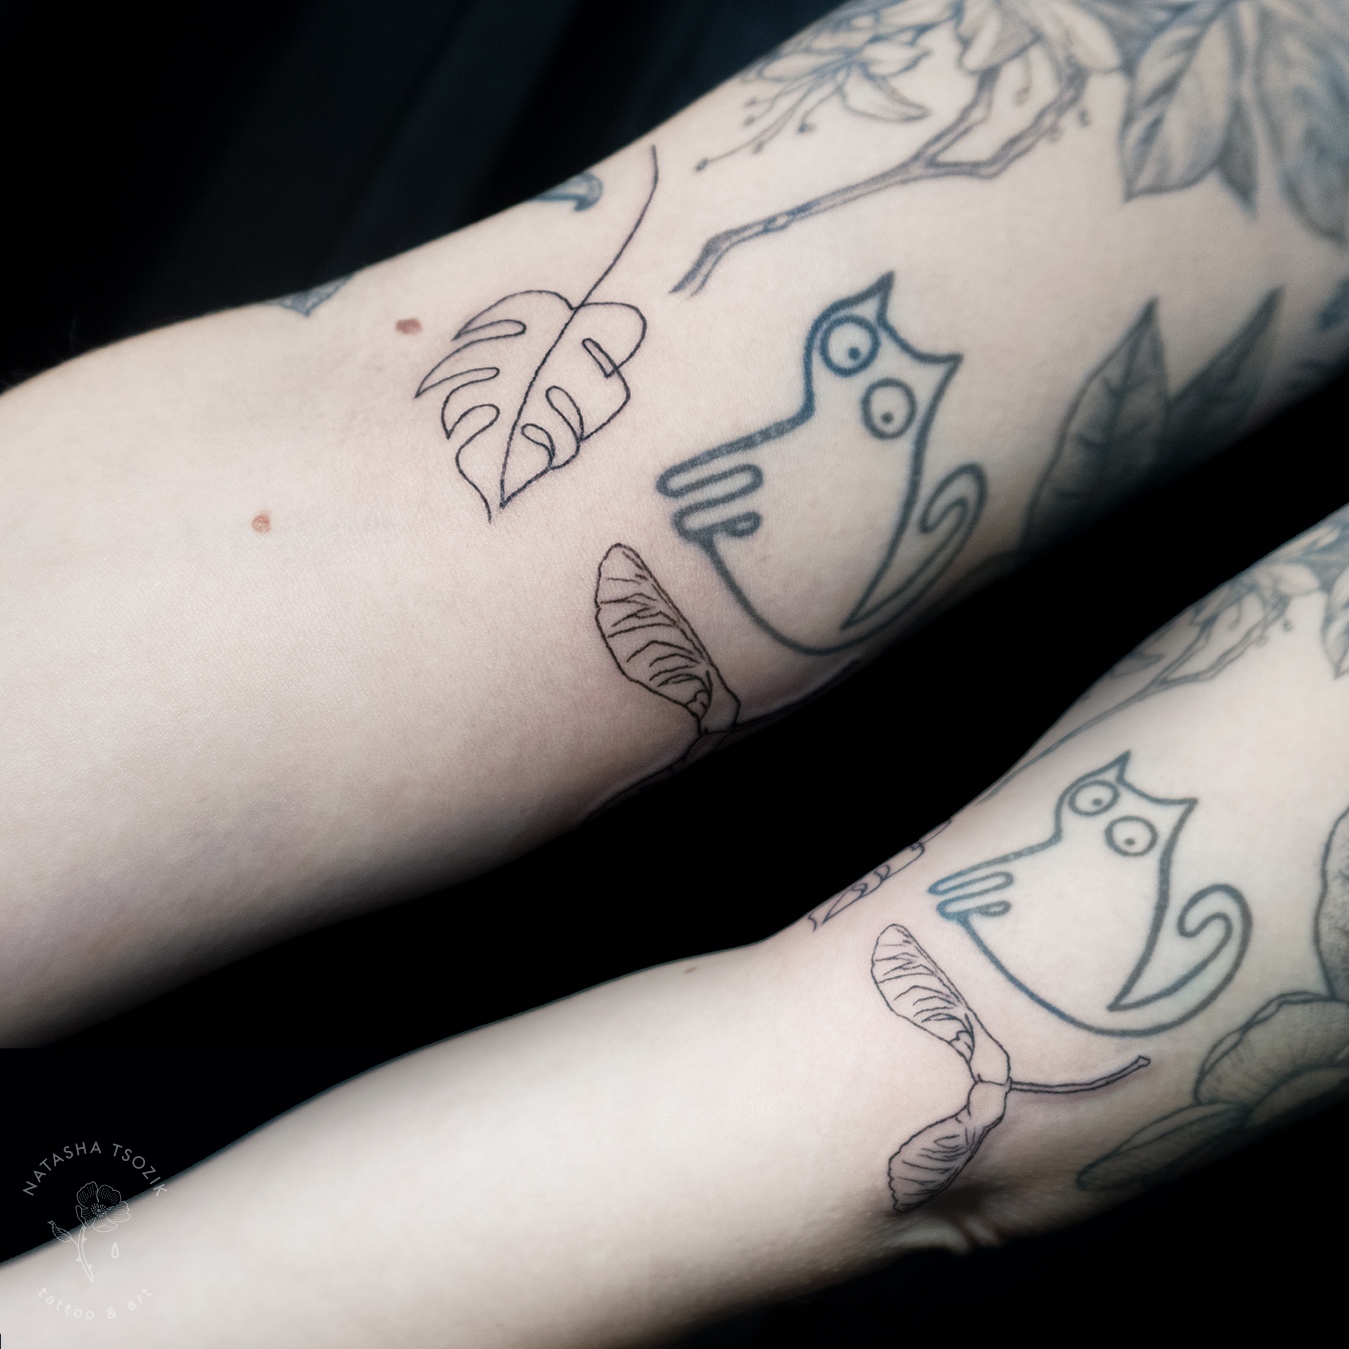 Small leaf tattoos on an arm